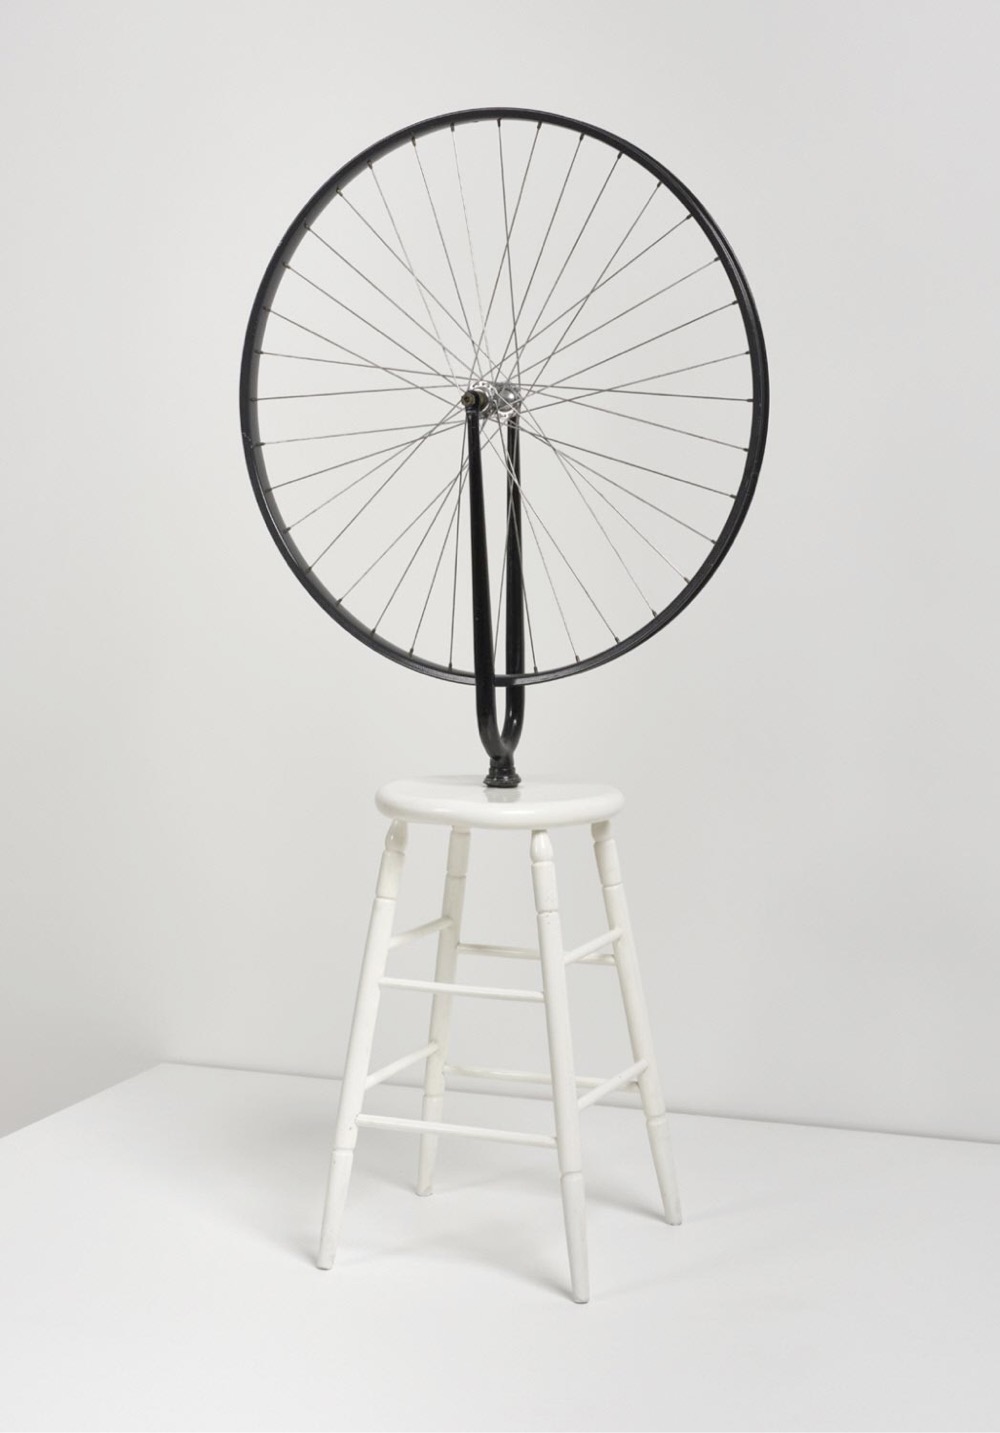 Bicycle Wheel by Marcel Duchamp